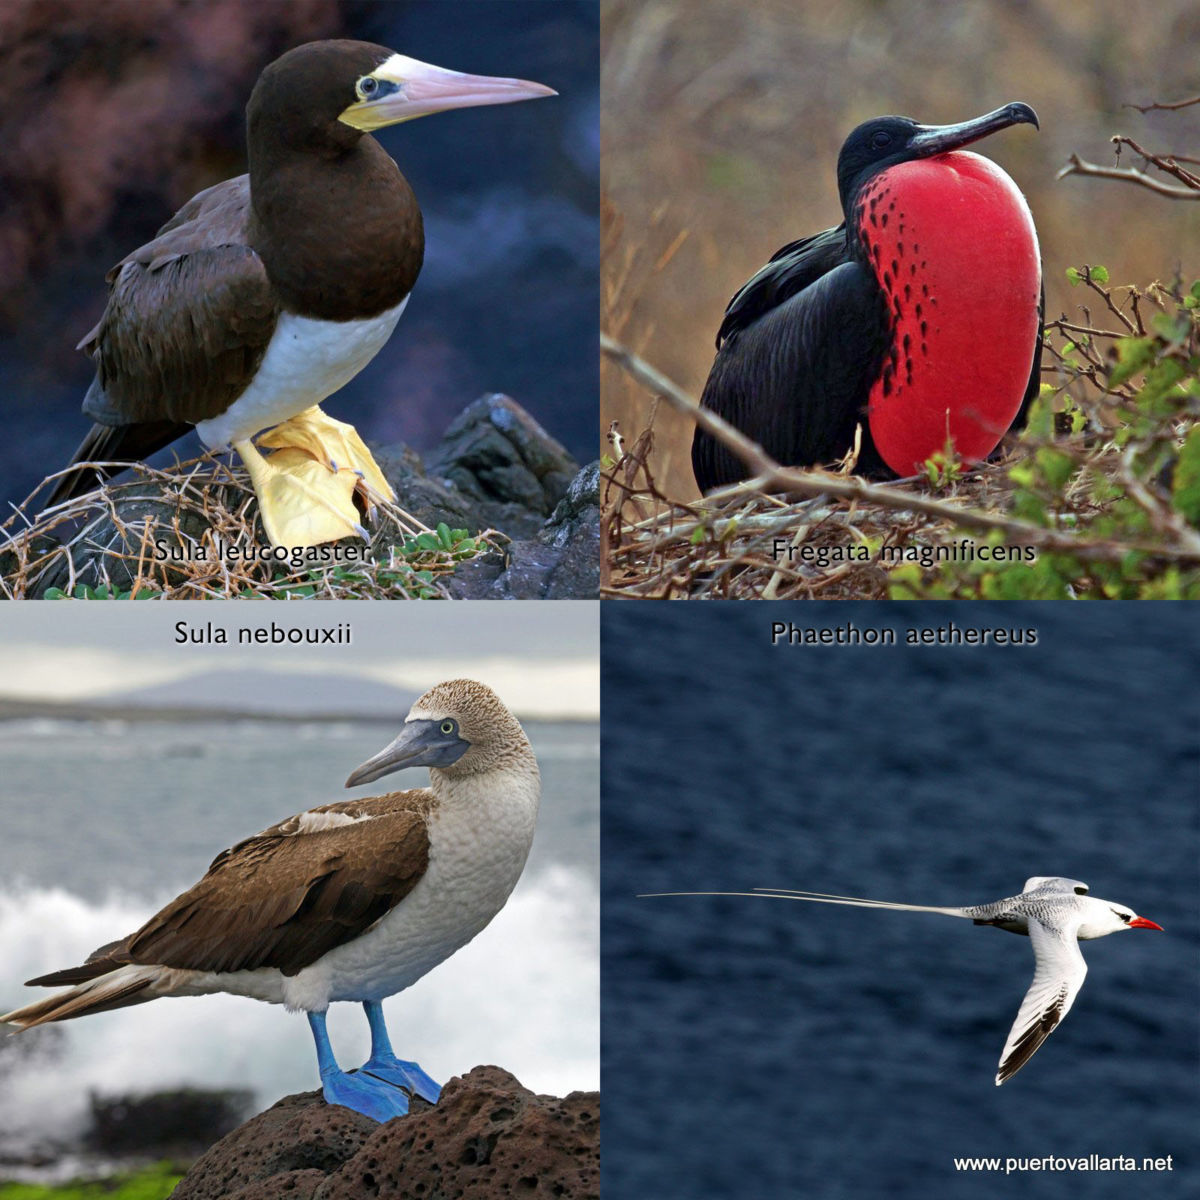 Four important bird species that live on the Marietas islands